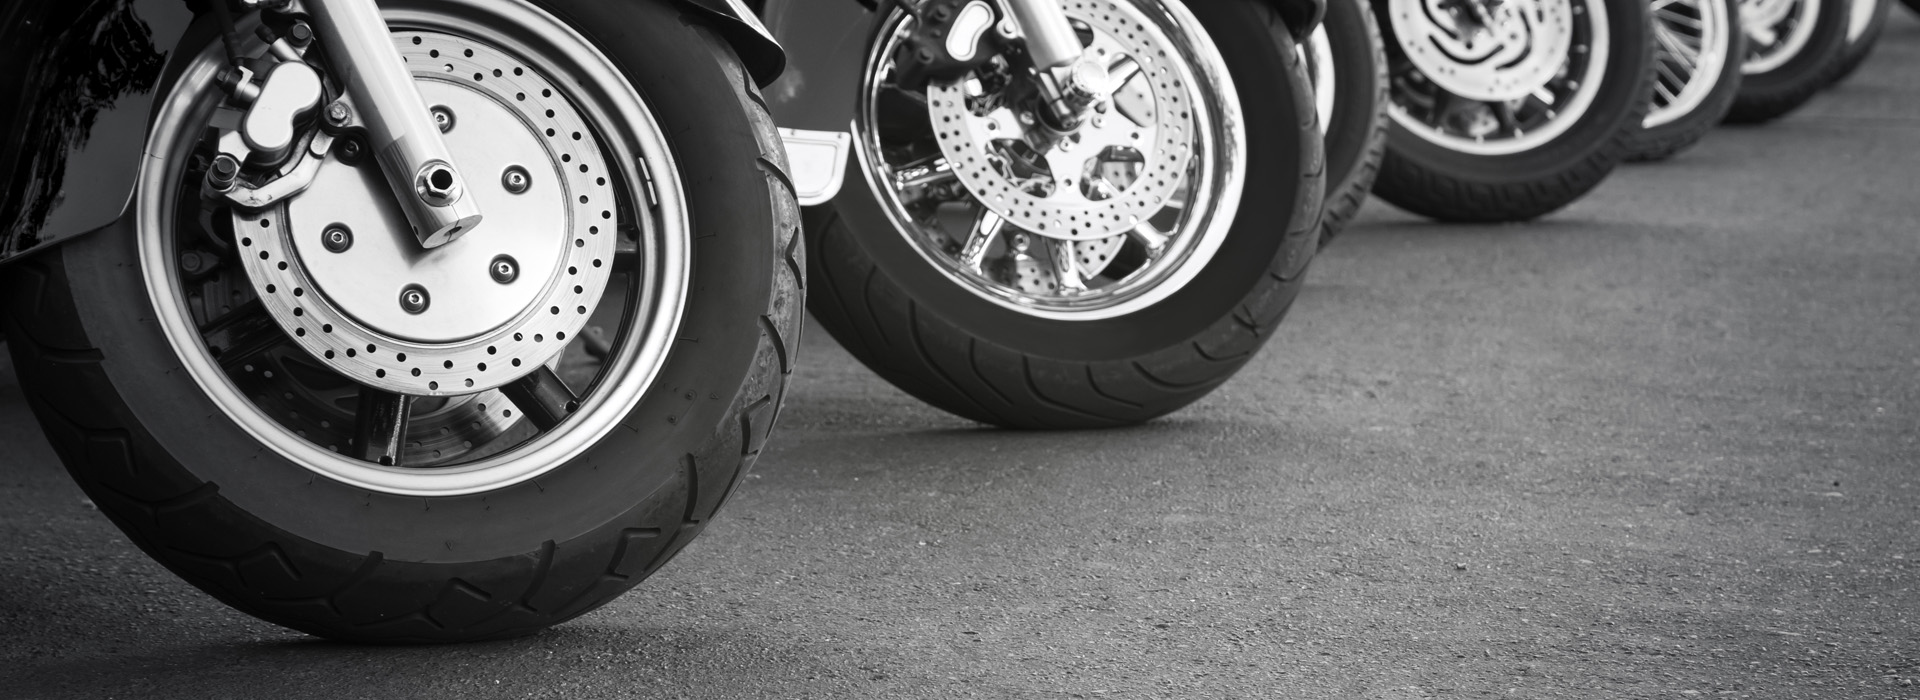 Arizona Defines Motorized Quadricycles as Limos